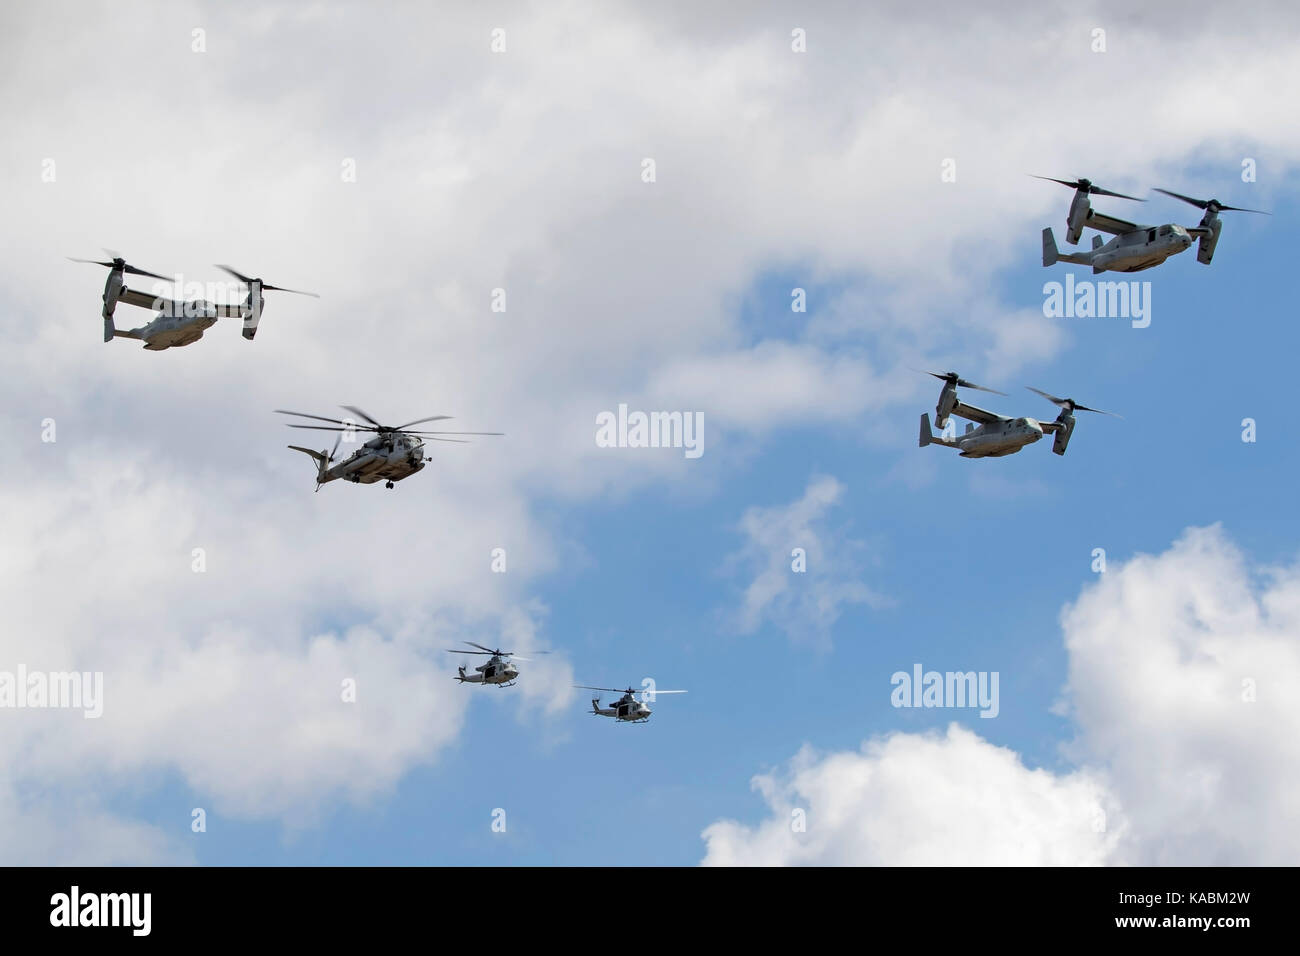 Helicopter airshow MAGTF demonstration at Miramar Airshow Stock Photo